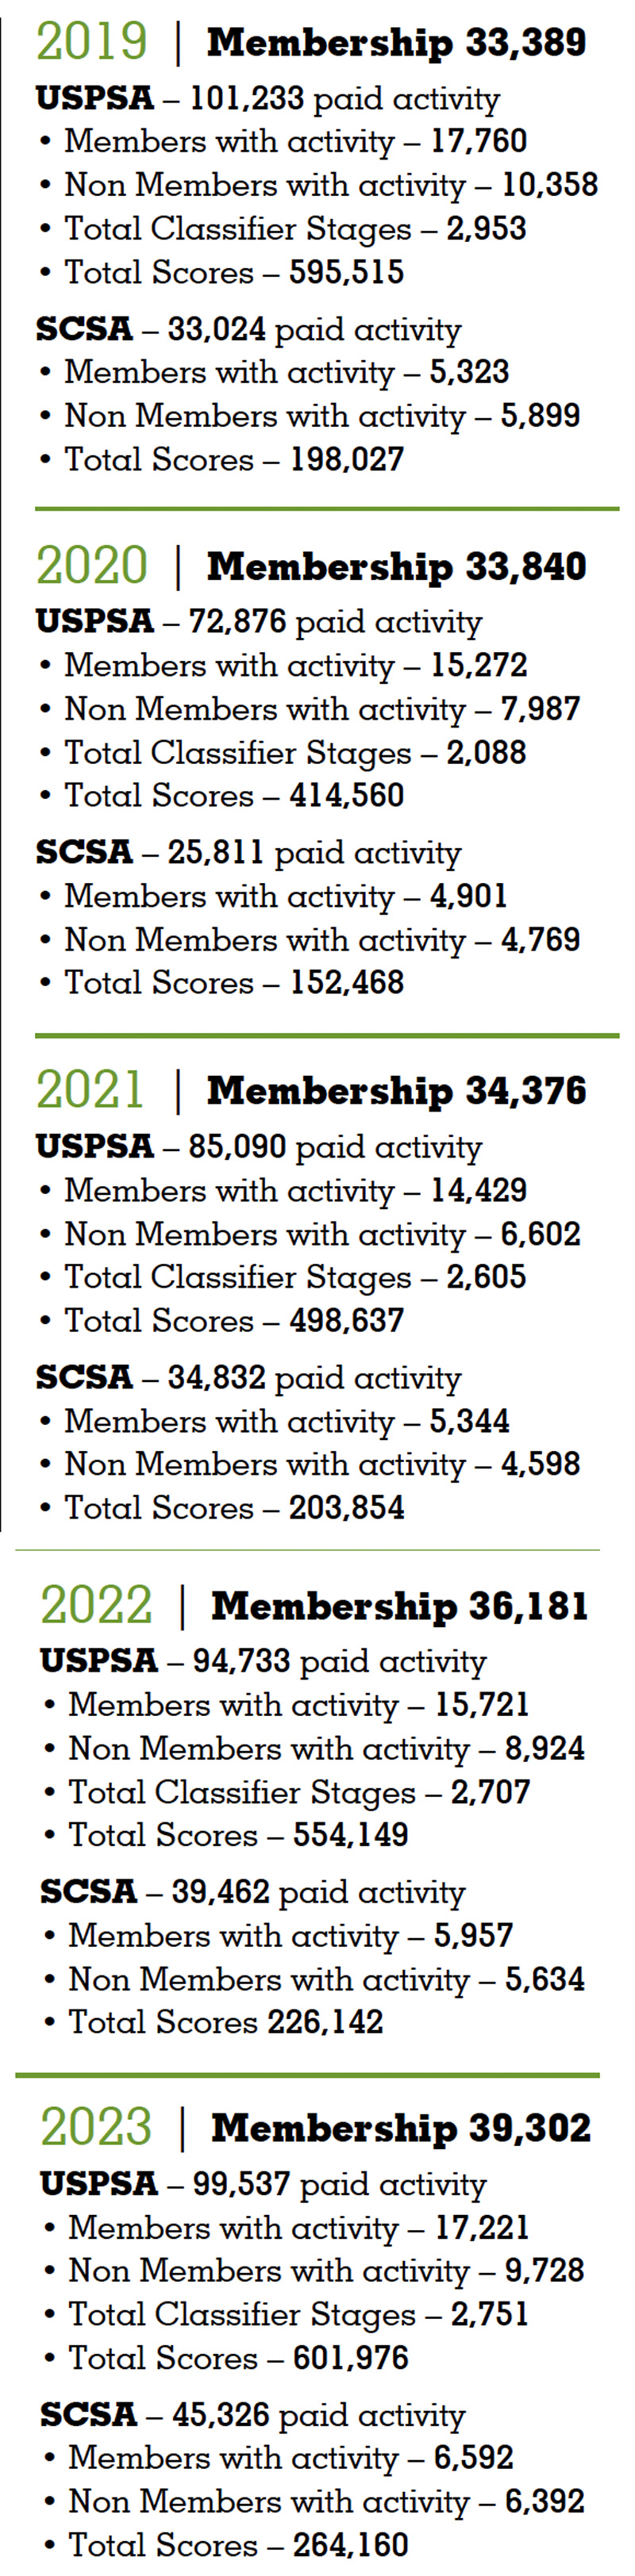 USPSA Membership